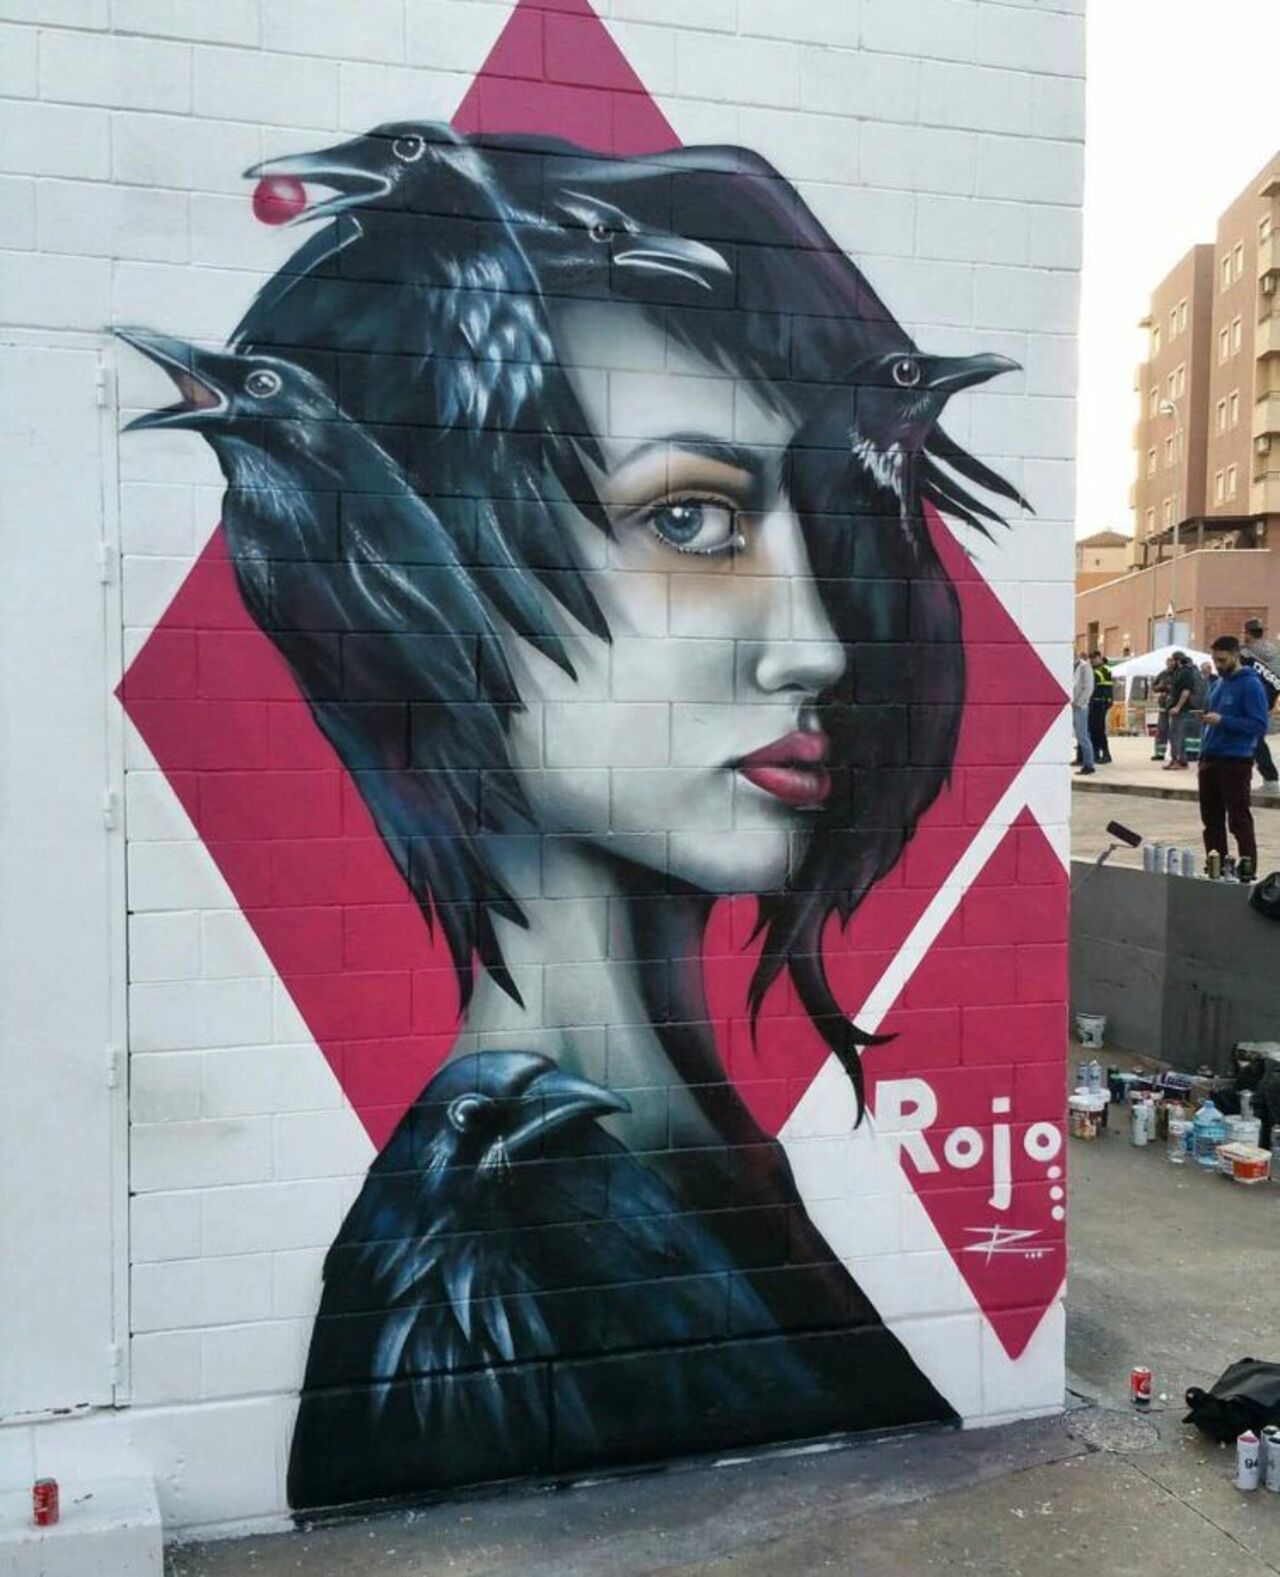 New work by Rojo #streetart #mural #graffiti #art https://t.co/h7DZiHGXaD